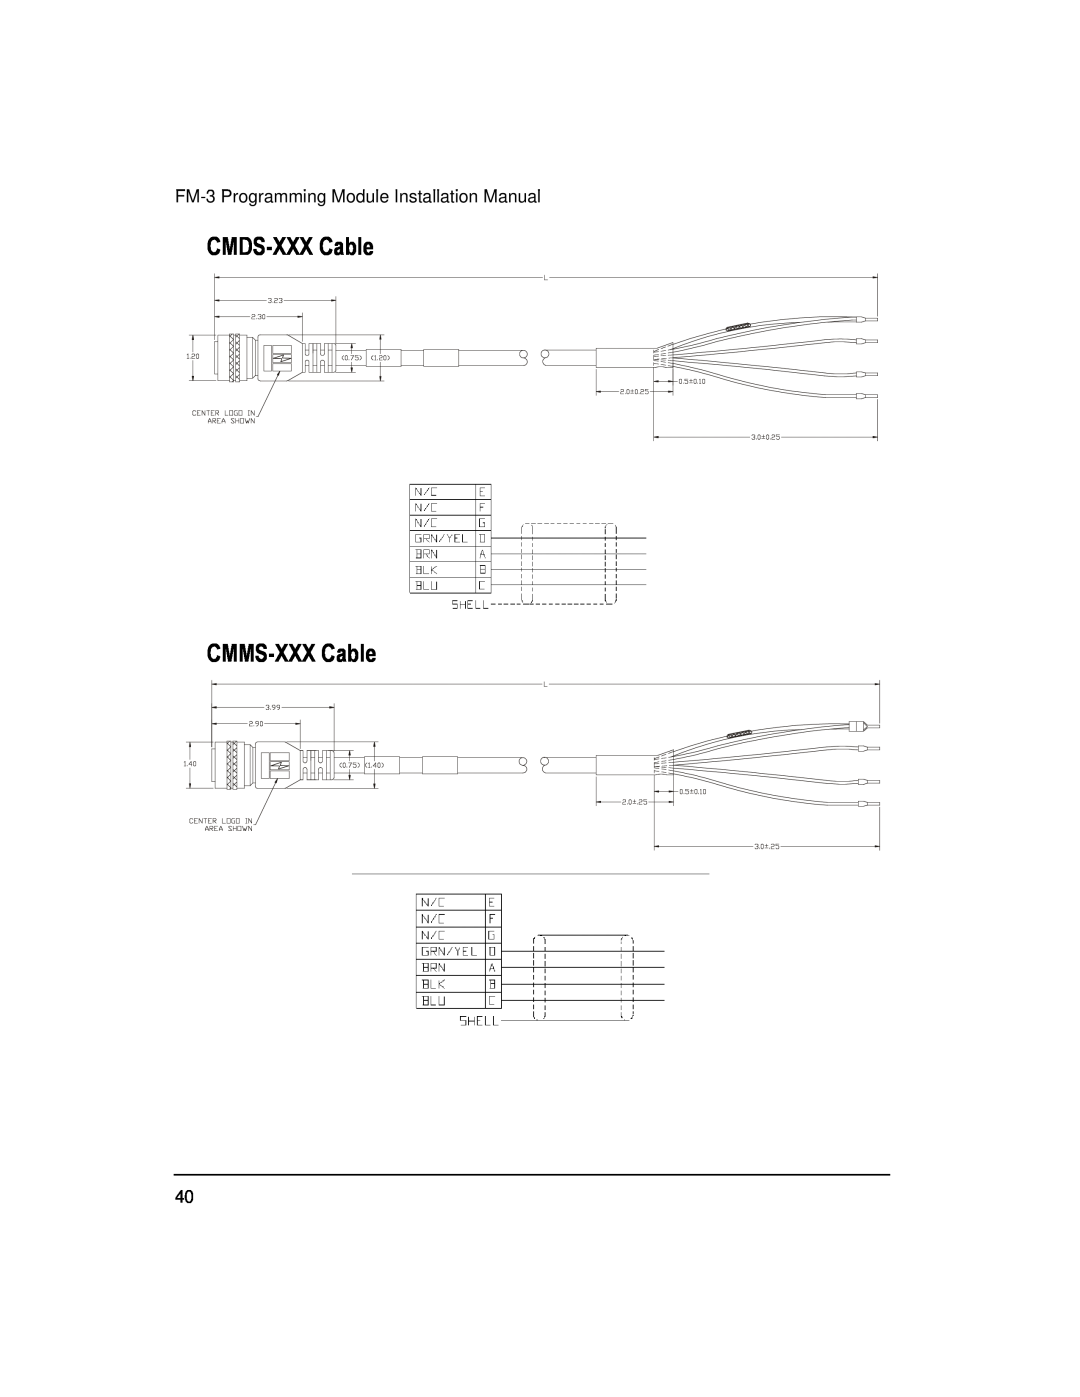 Emerson 400508-02 installation manual CMDS-XXX Cable CMMS-XXX Cable, FM-3 Programming Module Installation Manual 